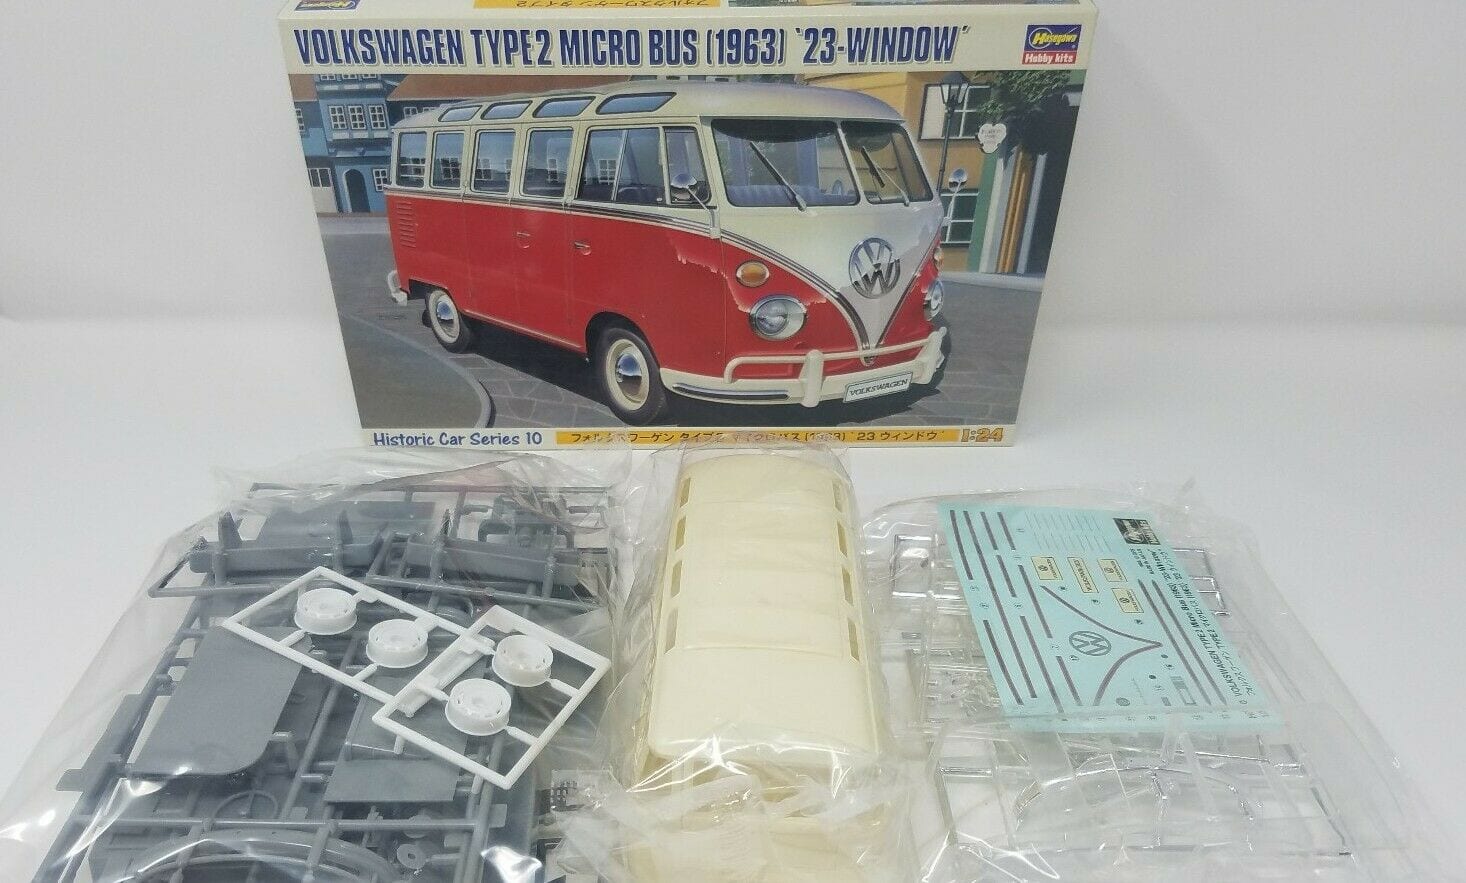 Hasegawa 1/24 Scale Model Car Kit VW Volkswagen Type 2 T1 Micro Samba Bus '1963